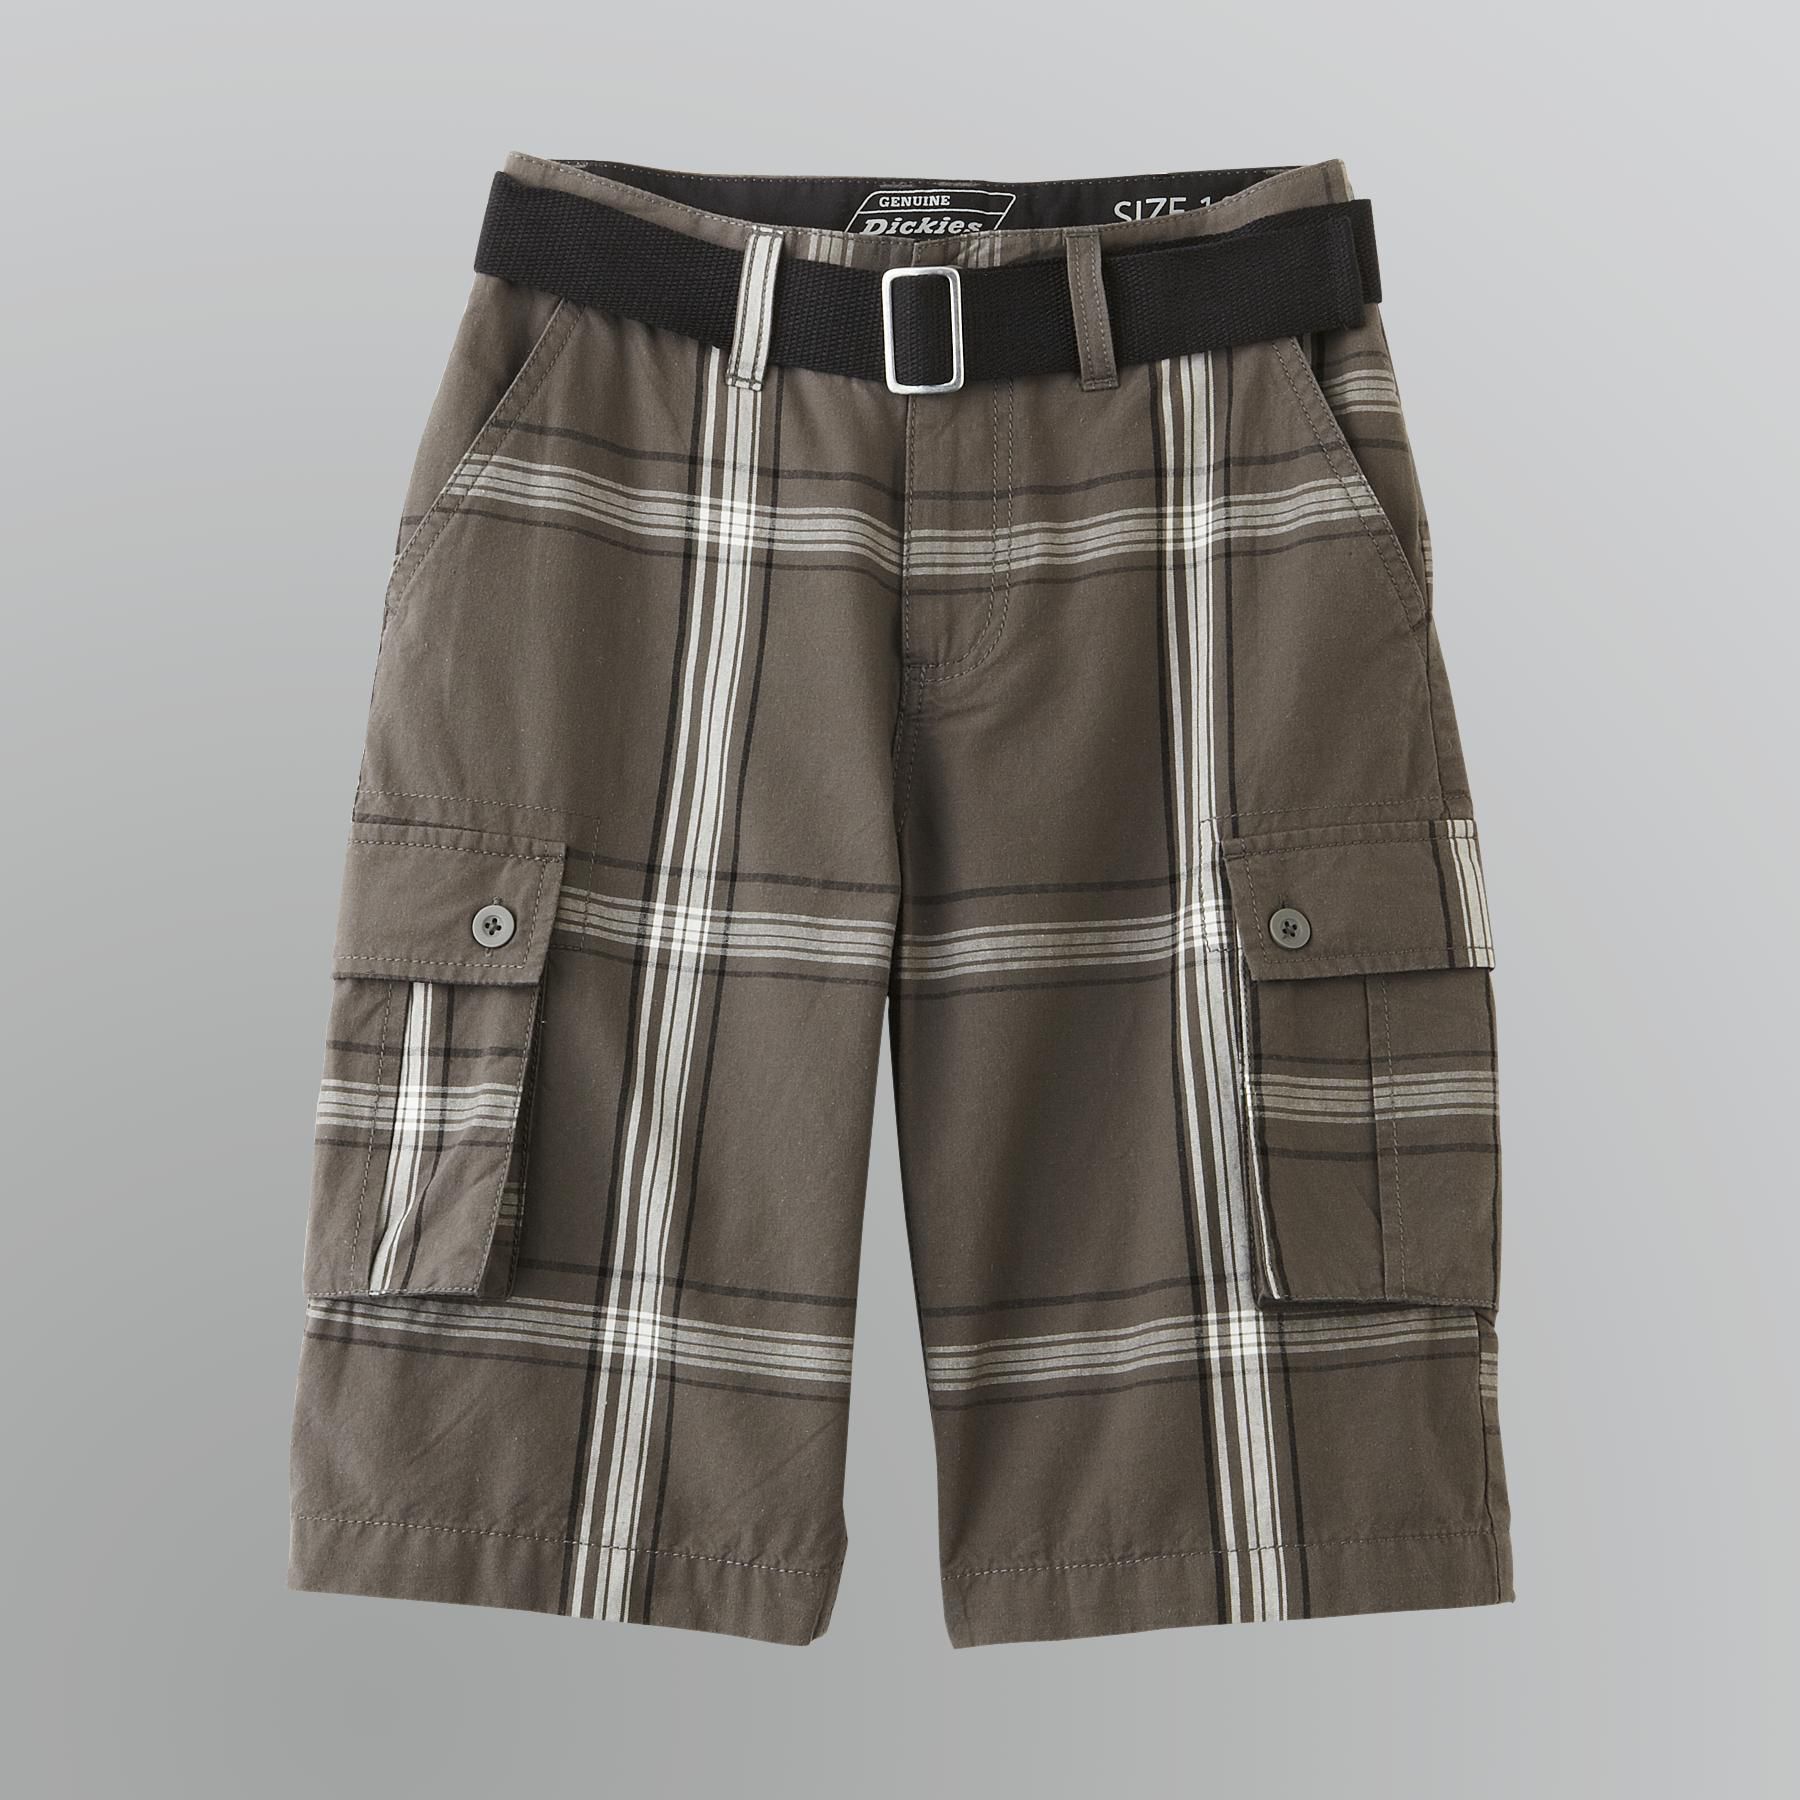 Genuine Dickies Boy's Shorts Woven Cargo Plaid Gray